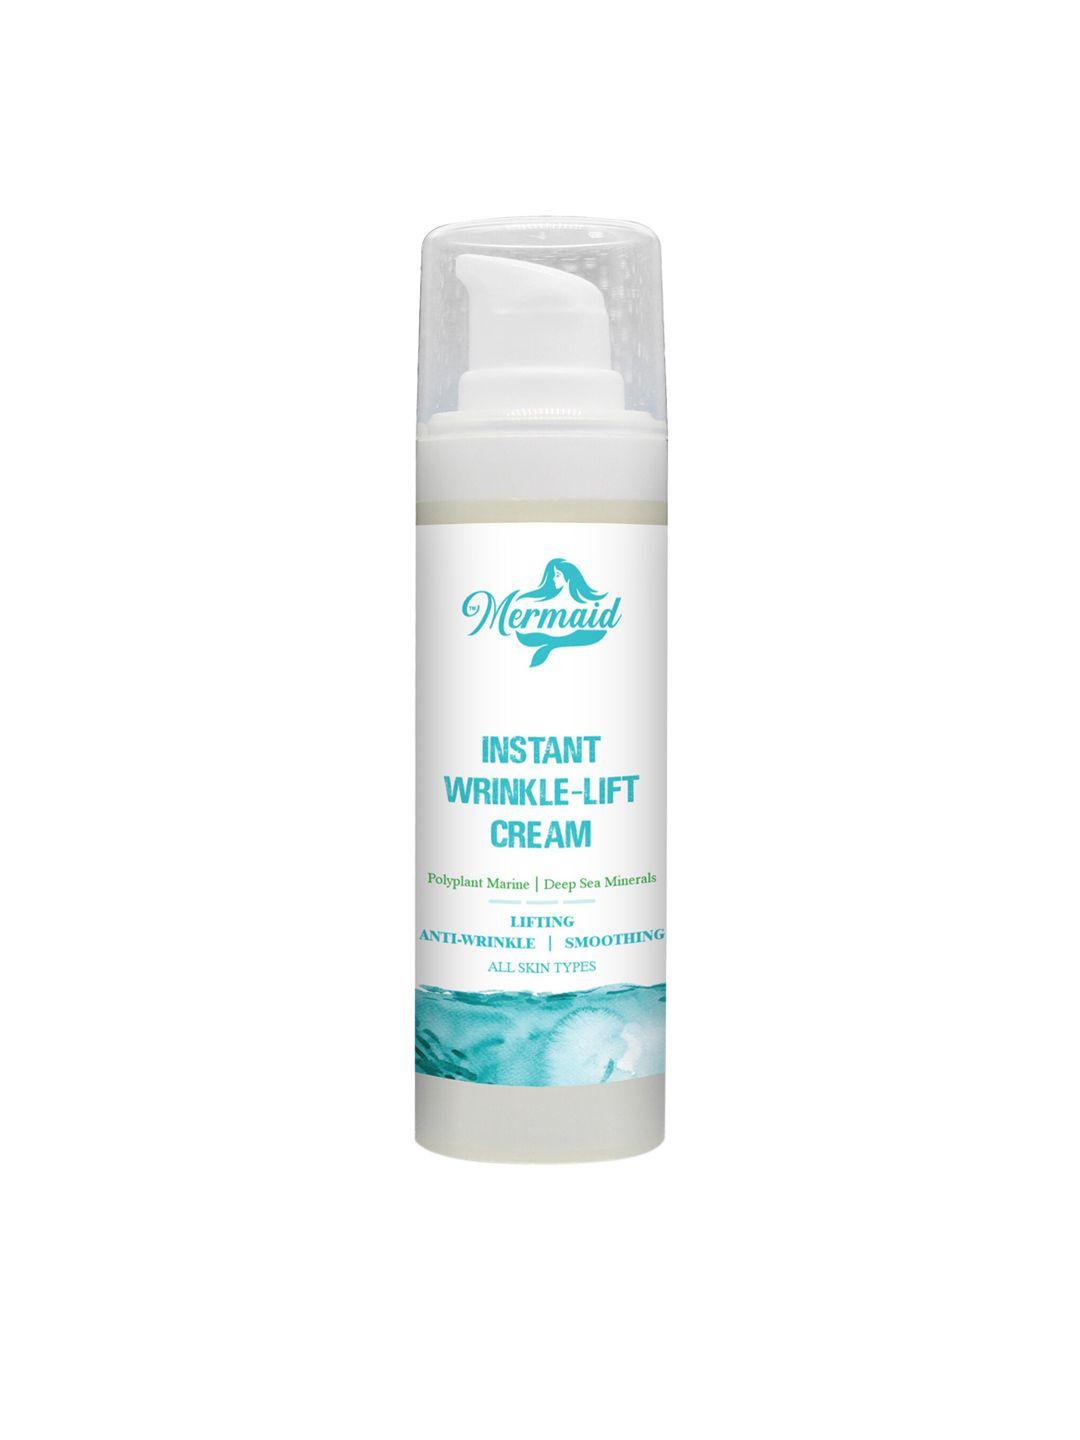 mermaid blue instant wrinkle lift cream with polyplant marine & deep sea minerals